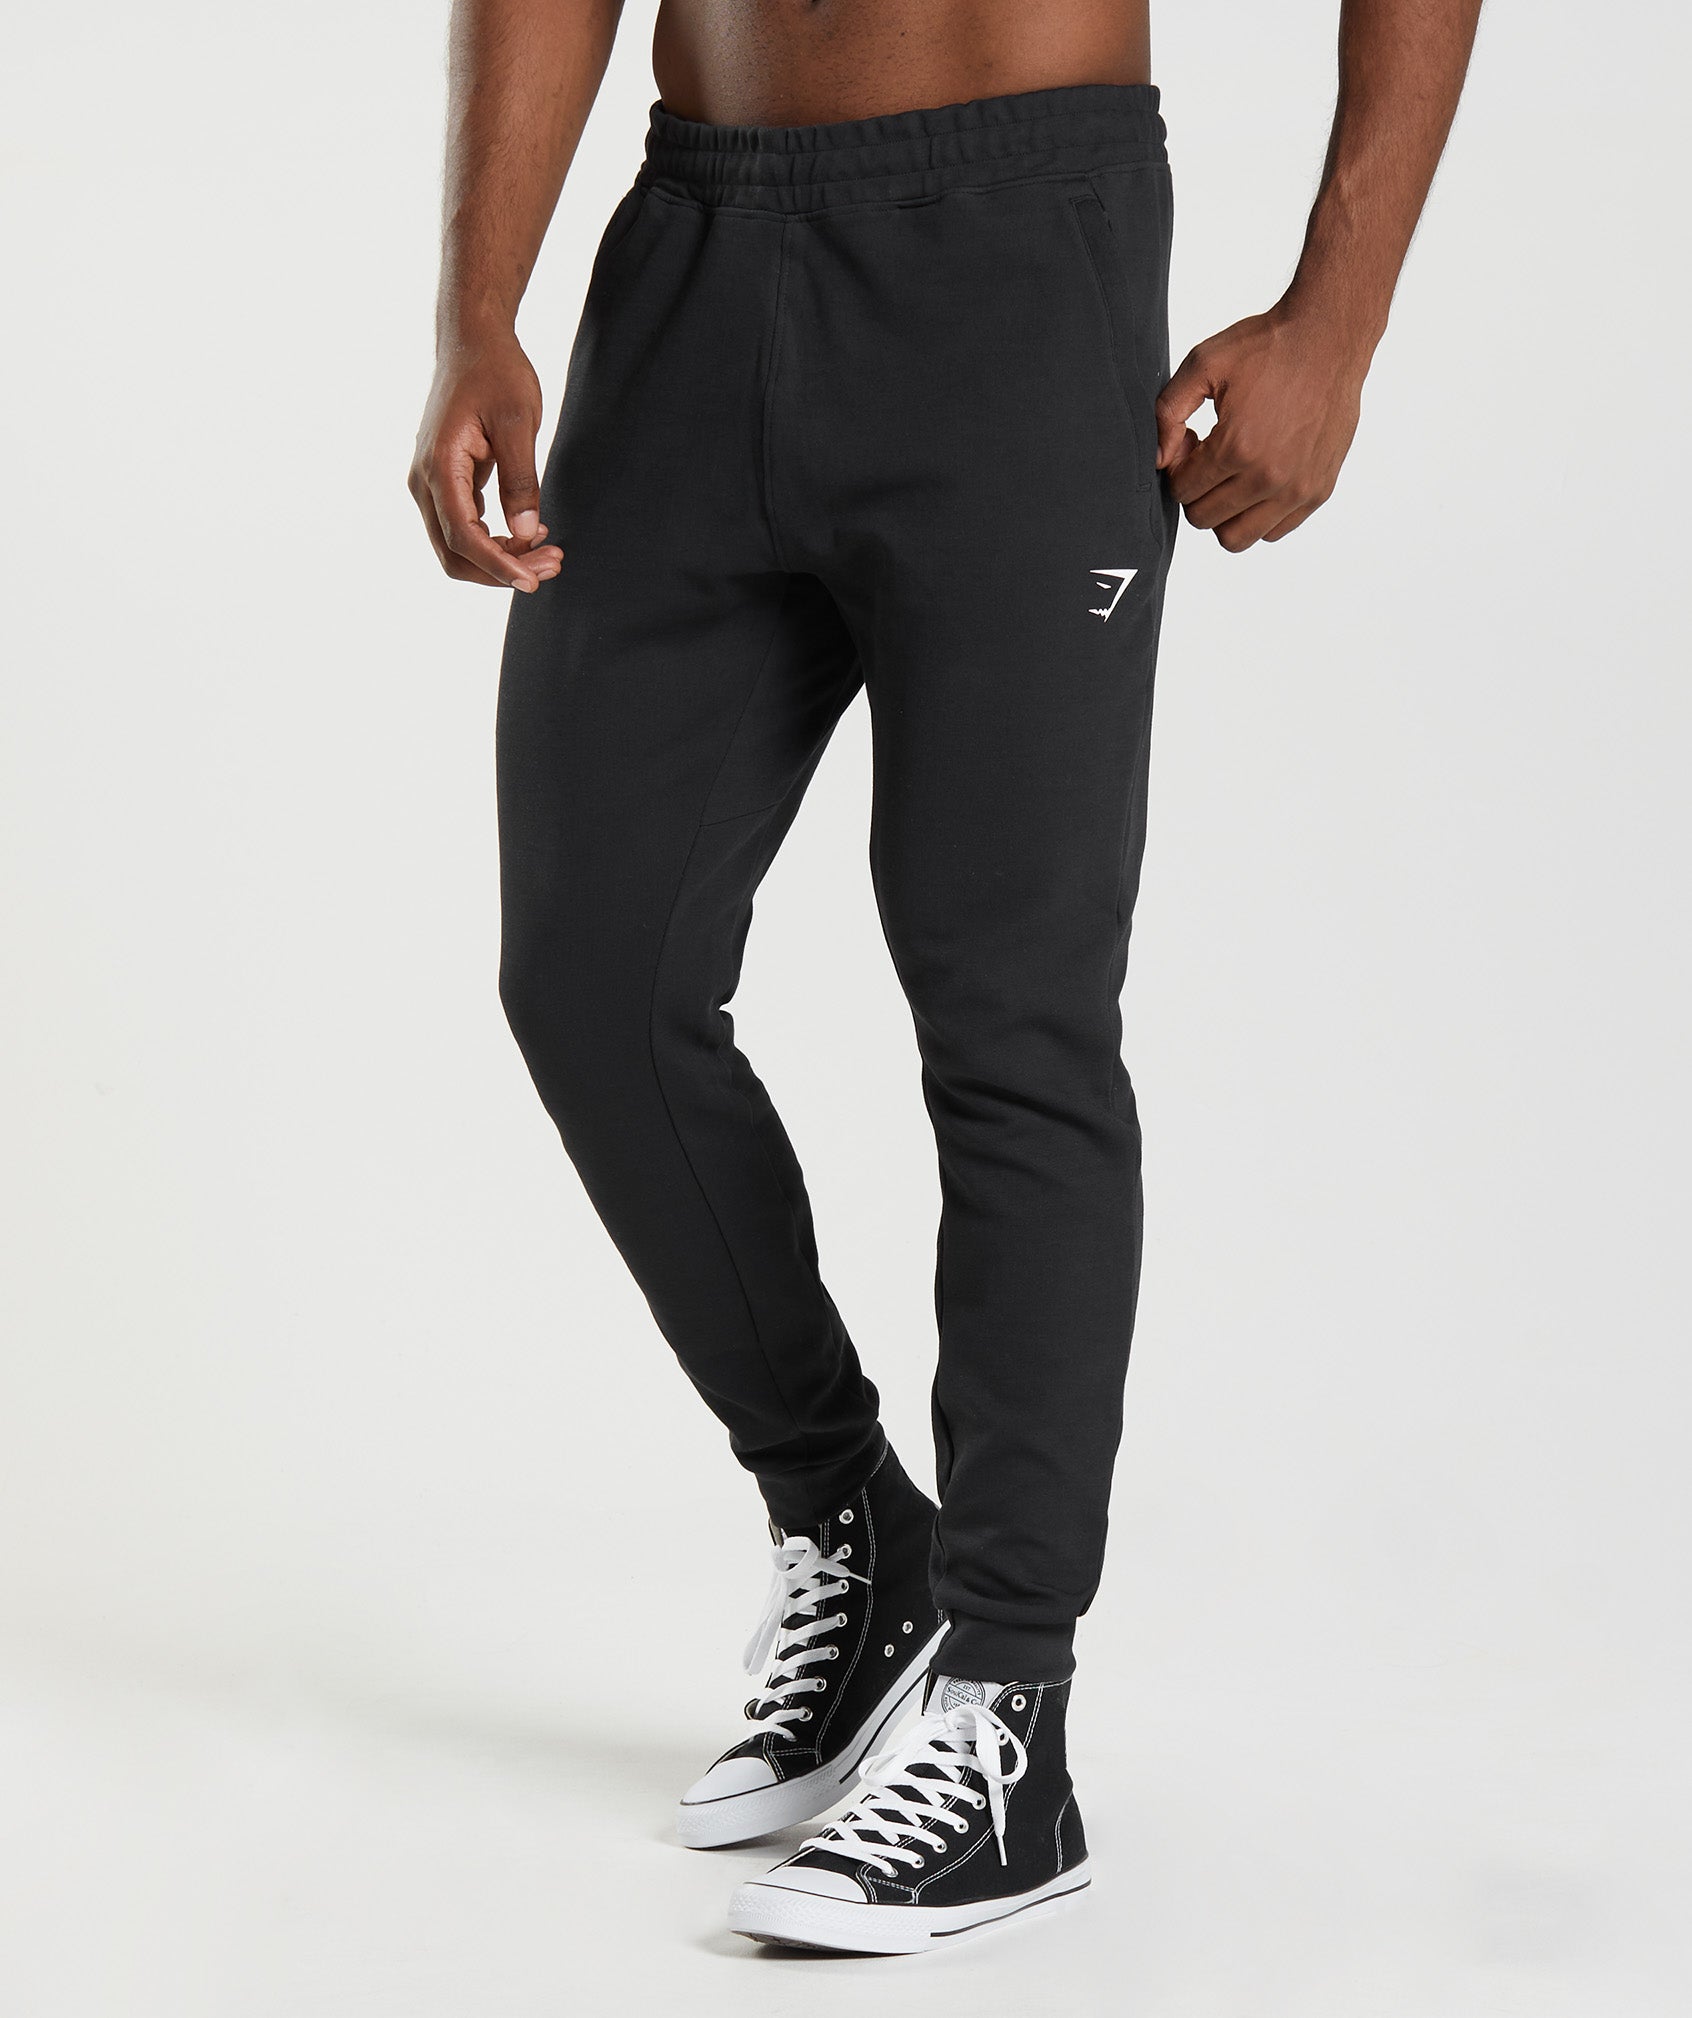 Gymshark Men's Crest Regular Fit Straight Leg Joggers DS1 Black Large NWT